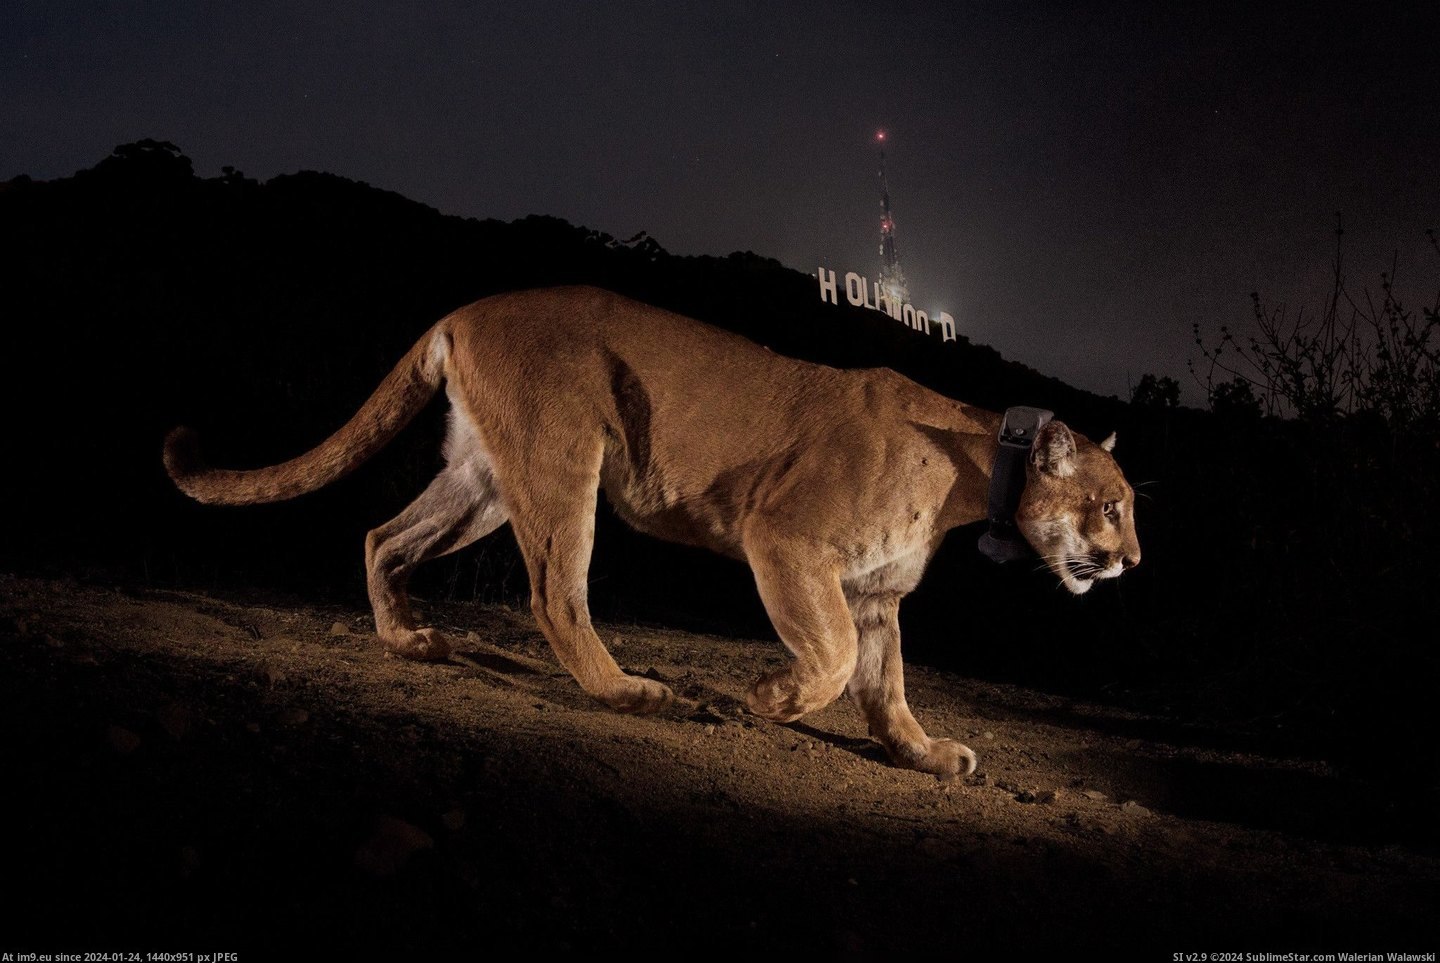 #Hollywood  #Cougar [Pics] A Cougar in Hollywood Pic. (Изображение из альбом My r/PICS favs))